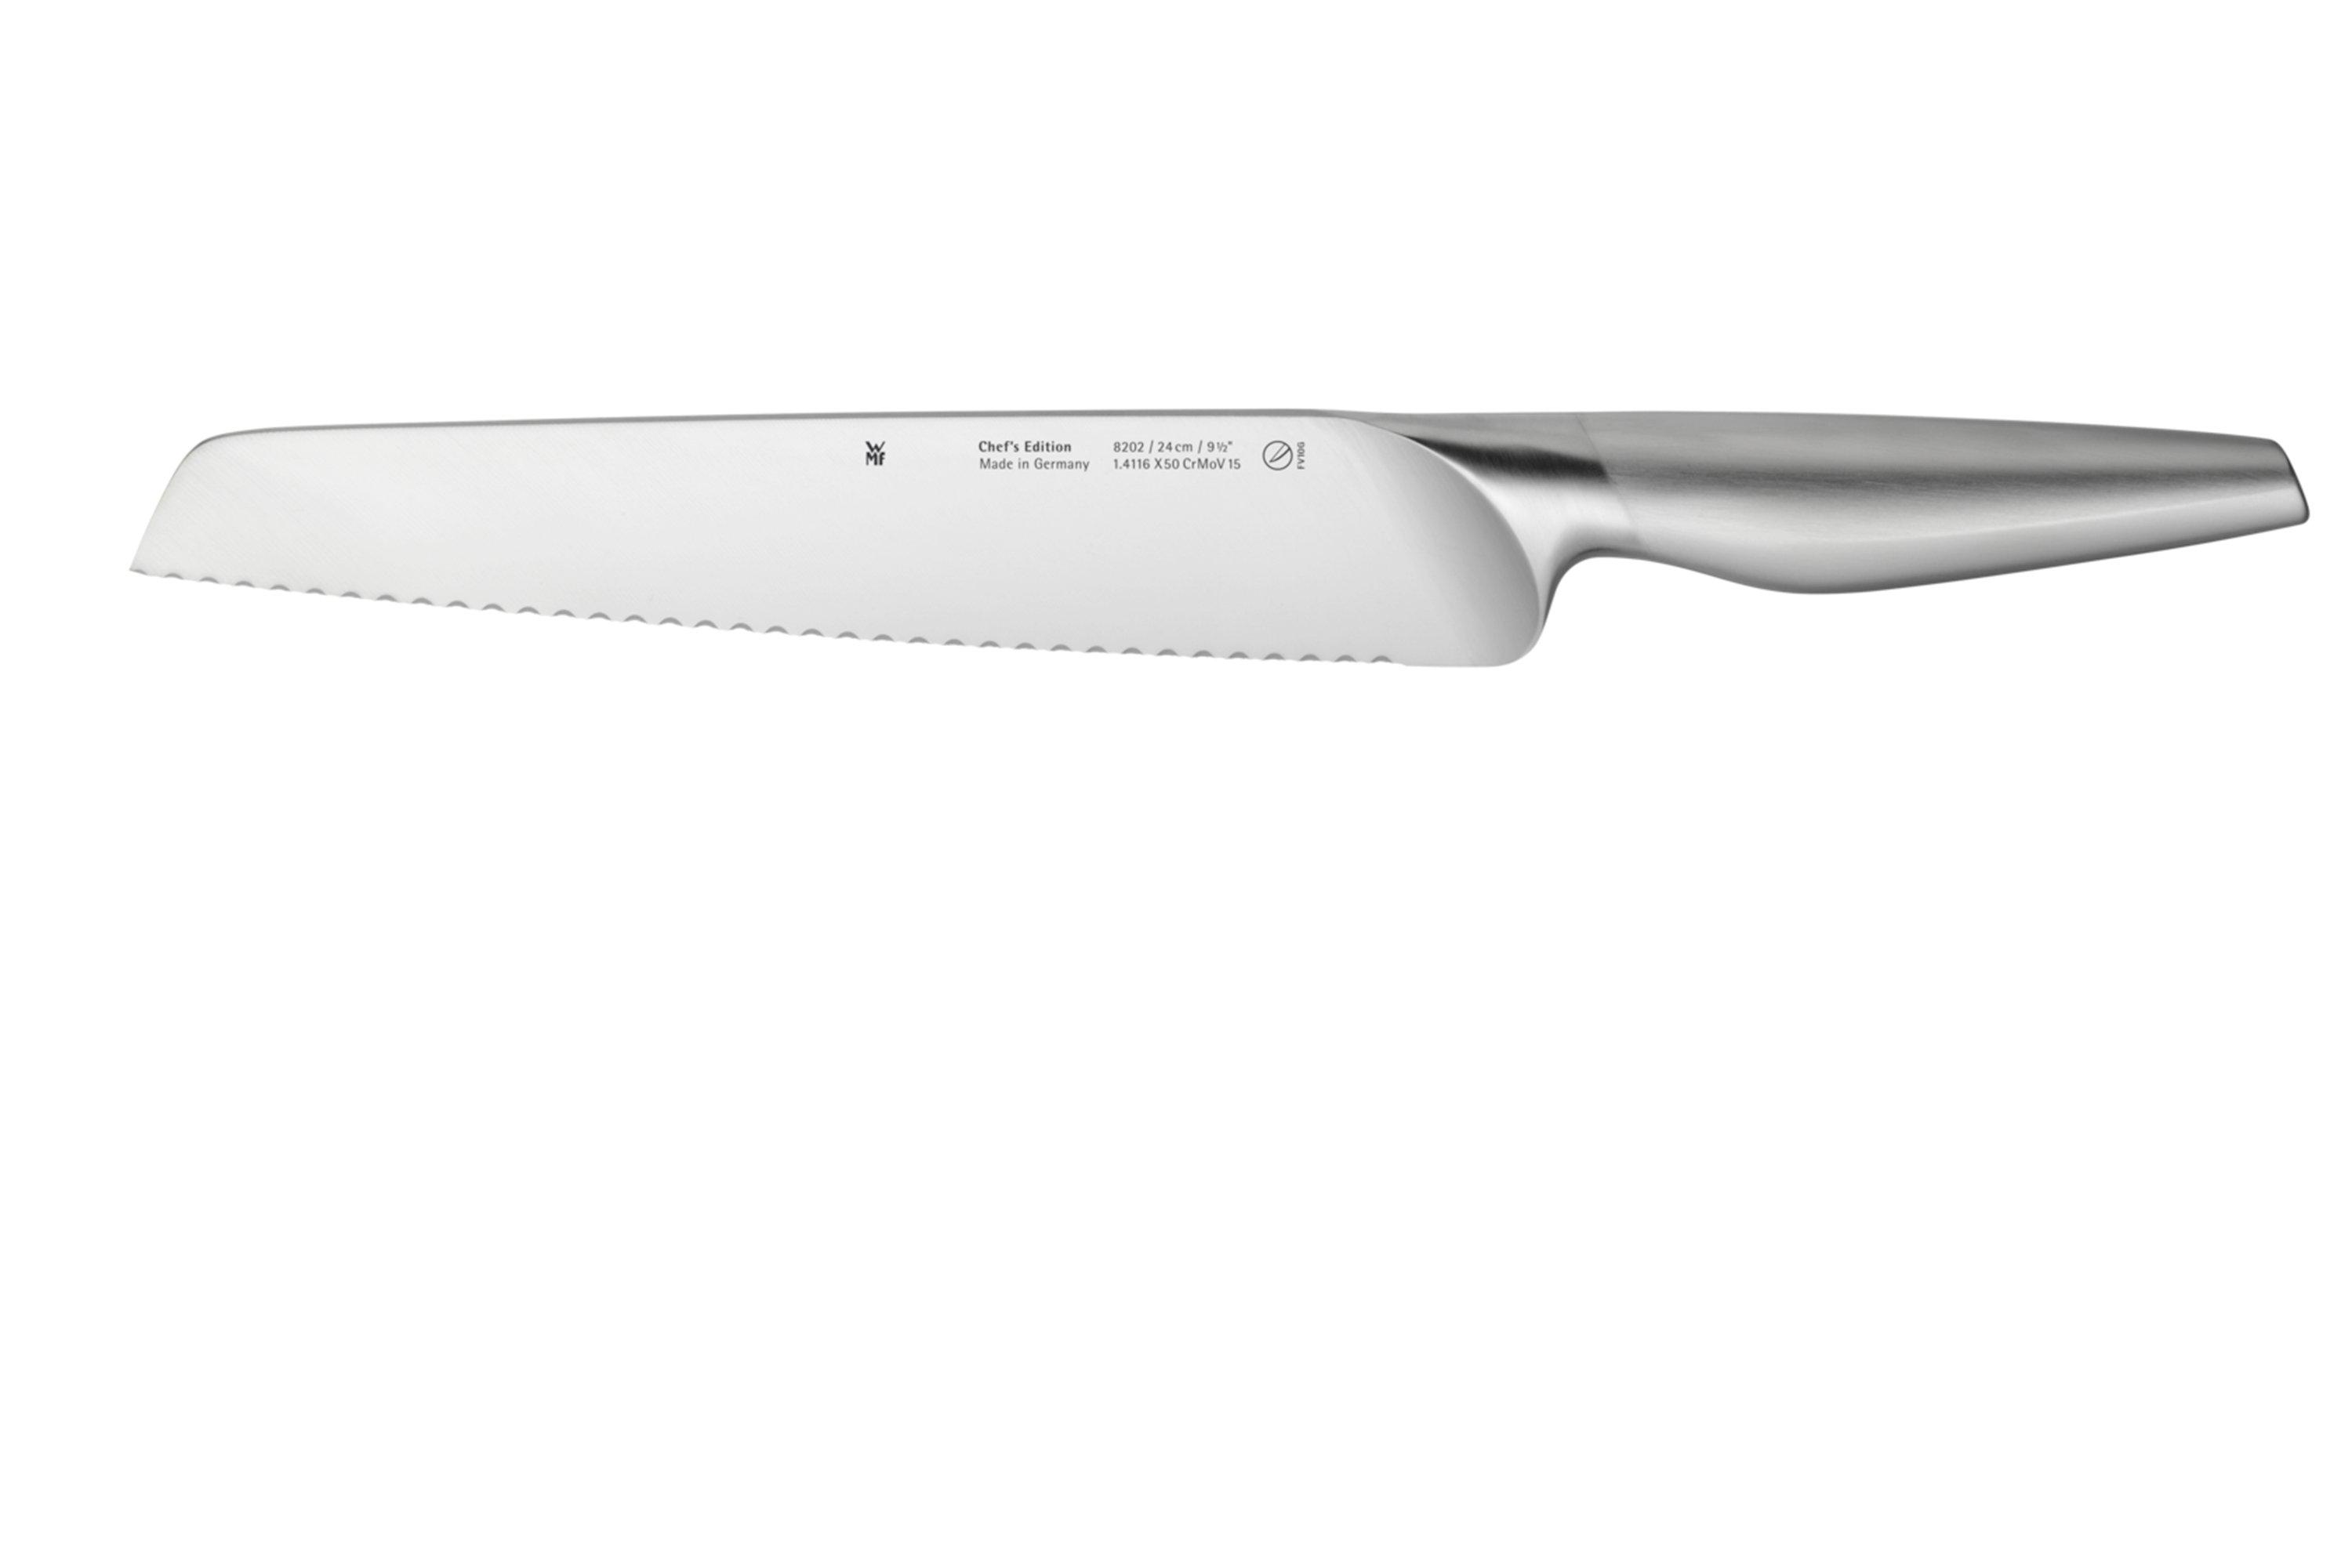 WMF Chef's Edition 1882026032 bread knife, 24 cm | Advantageously ...